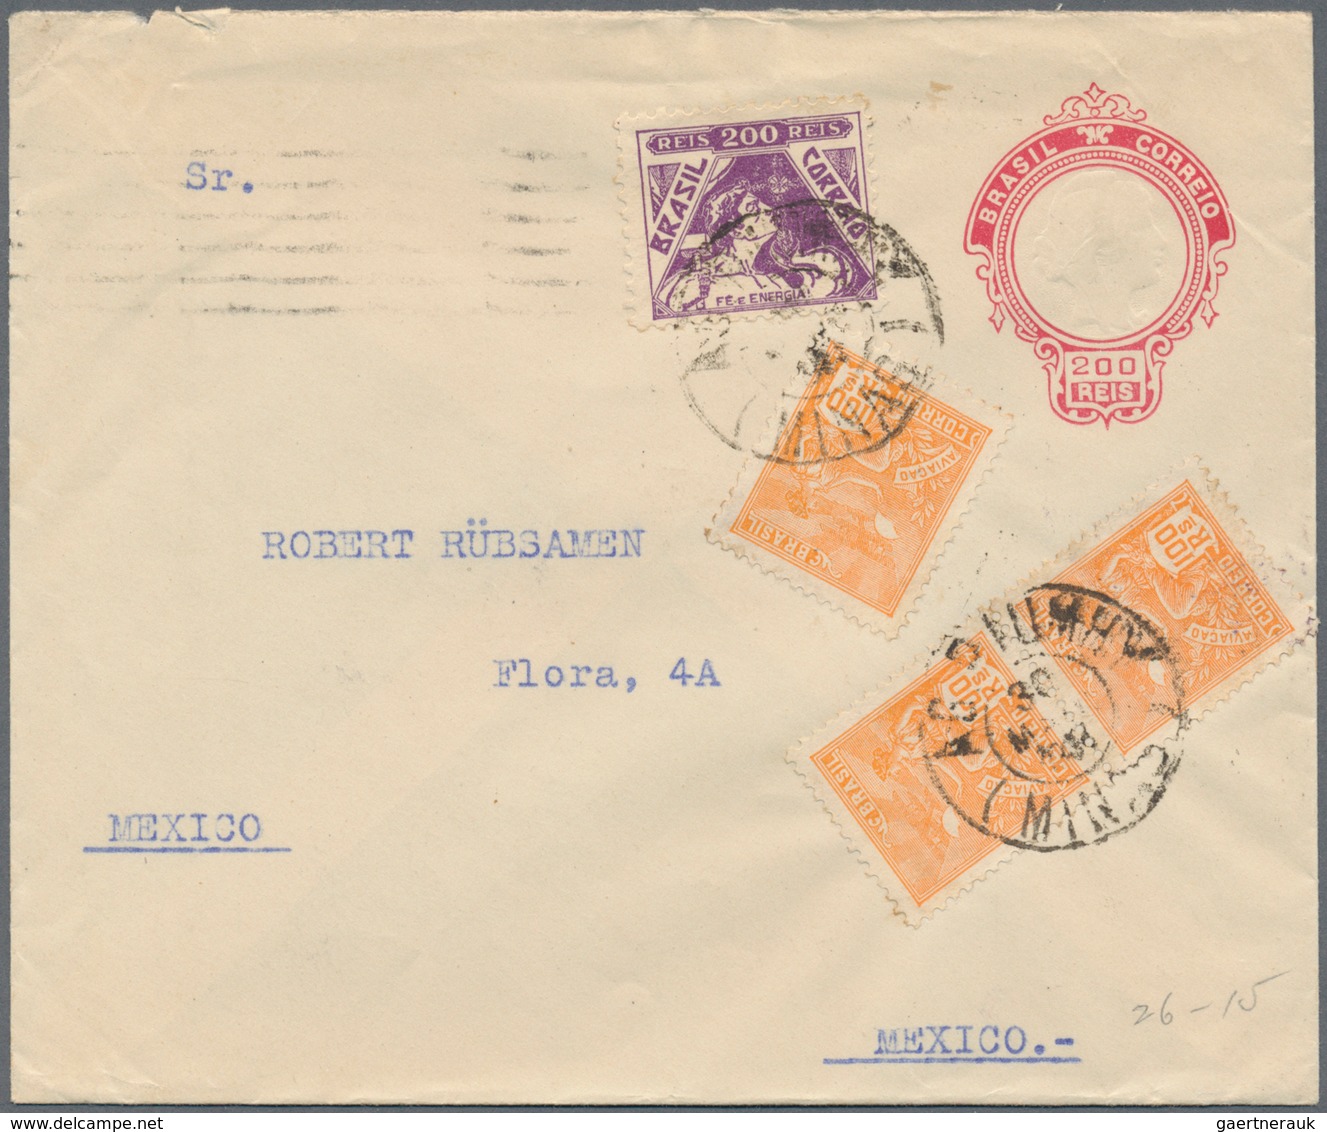 Brasilien - Ganzsachen: 1885/1936, mostly used stationery envelopes, cards, wrappers, letter cards: